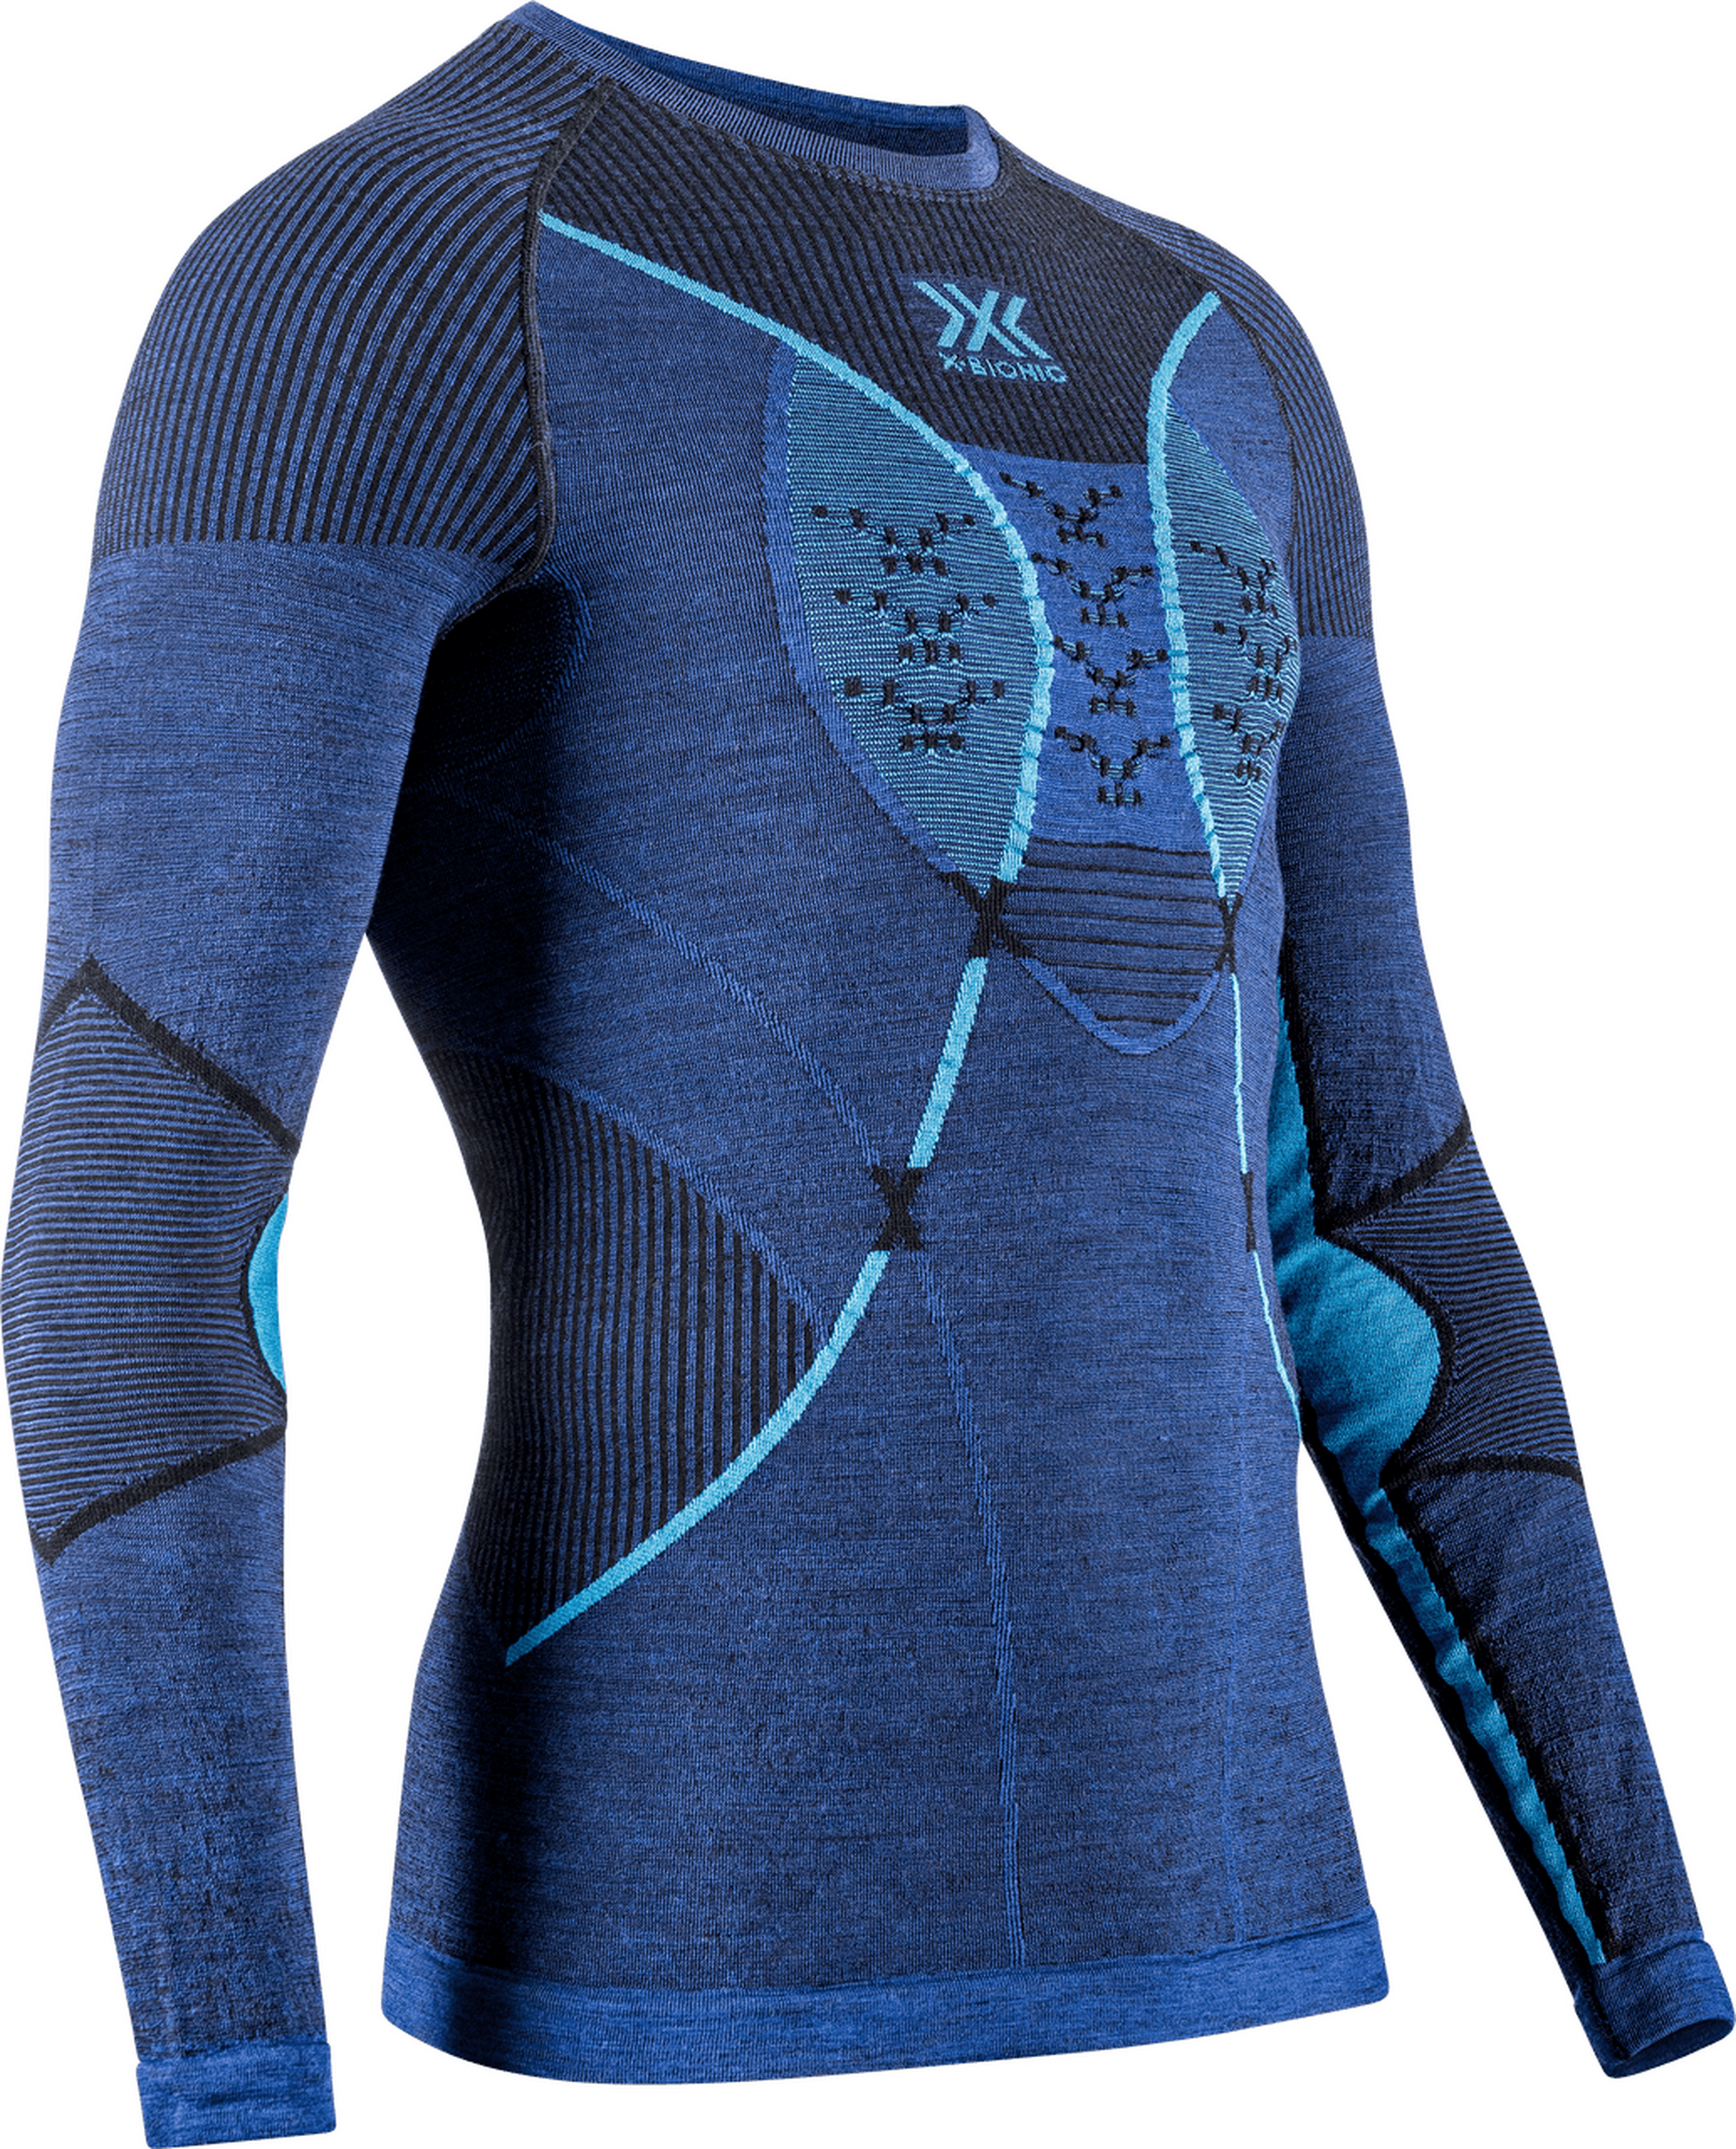 Im Test: X-Bionic Merino Shirt LG SL